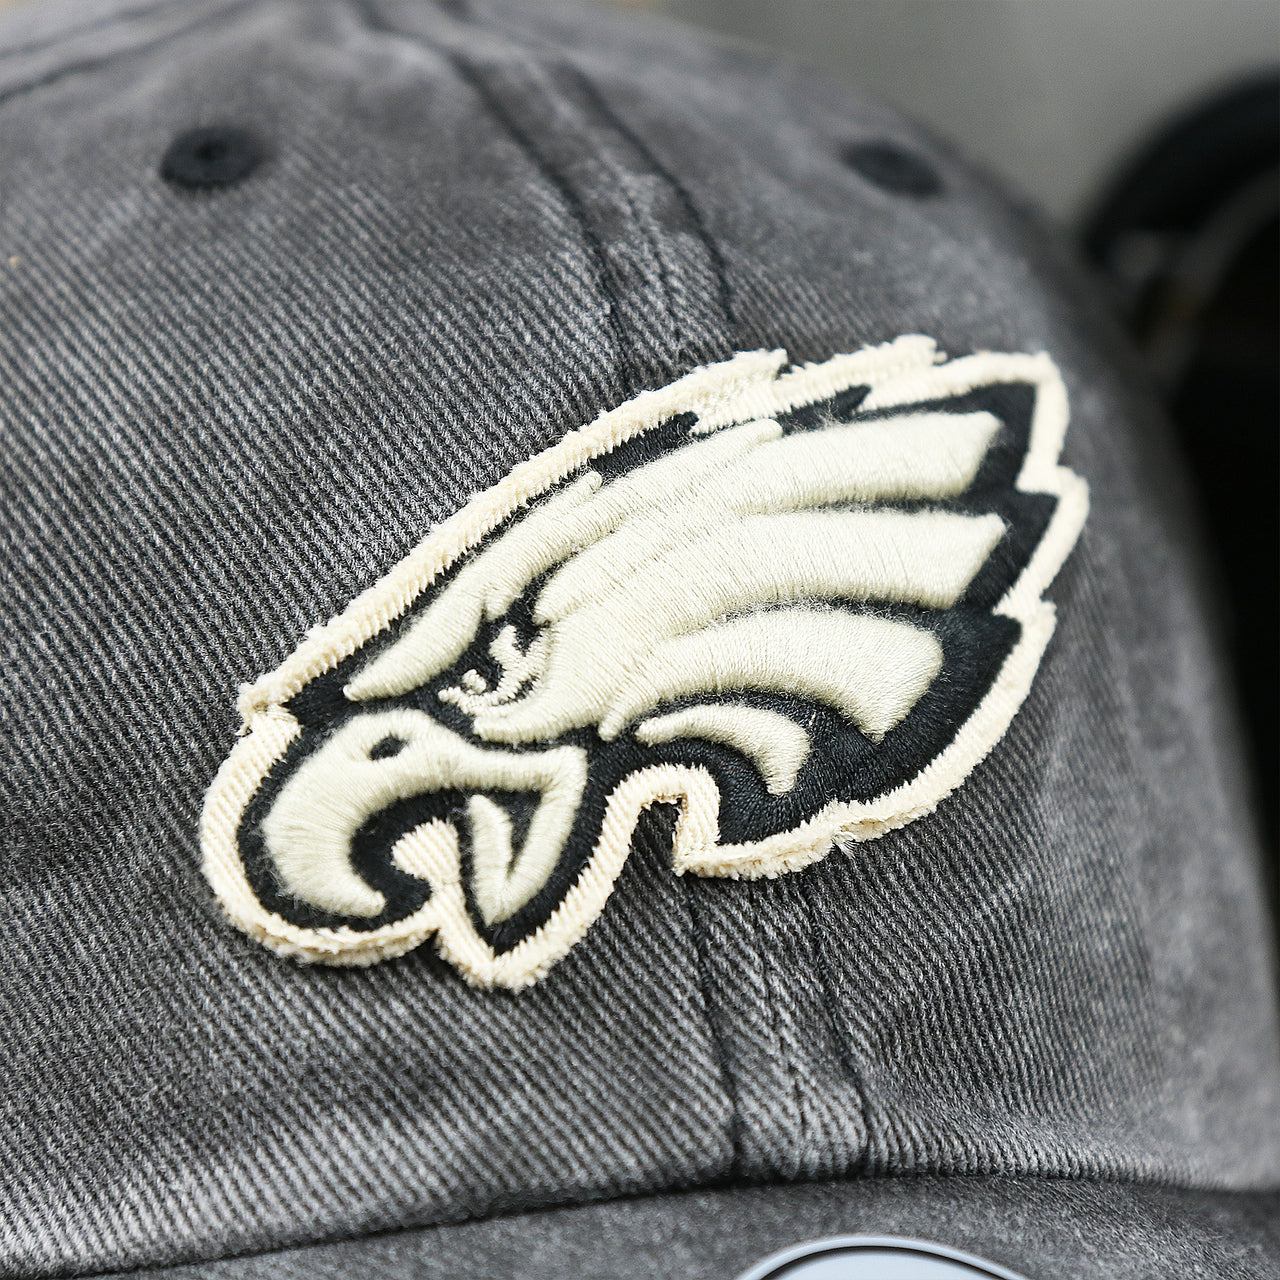 The Eagles Logo on the Philadelphia Eagles Worn Dark Gray Dad Hat | Worn Dark Gray Dad Hat